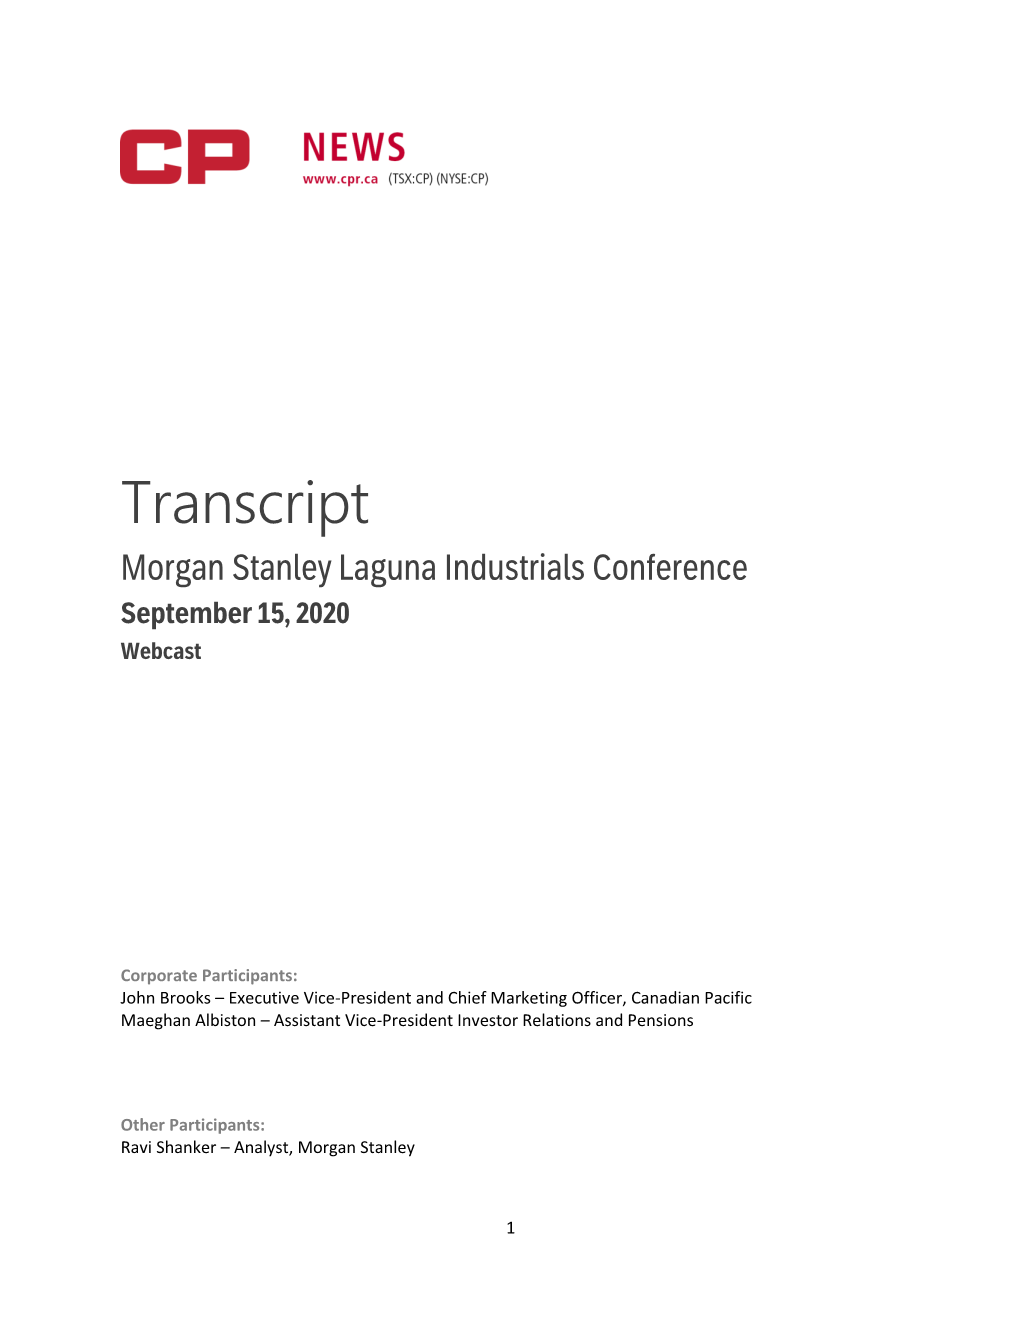 Transcript Morgan Stanley Laguna Industrials Conference September 15, 2020 Webcast